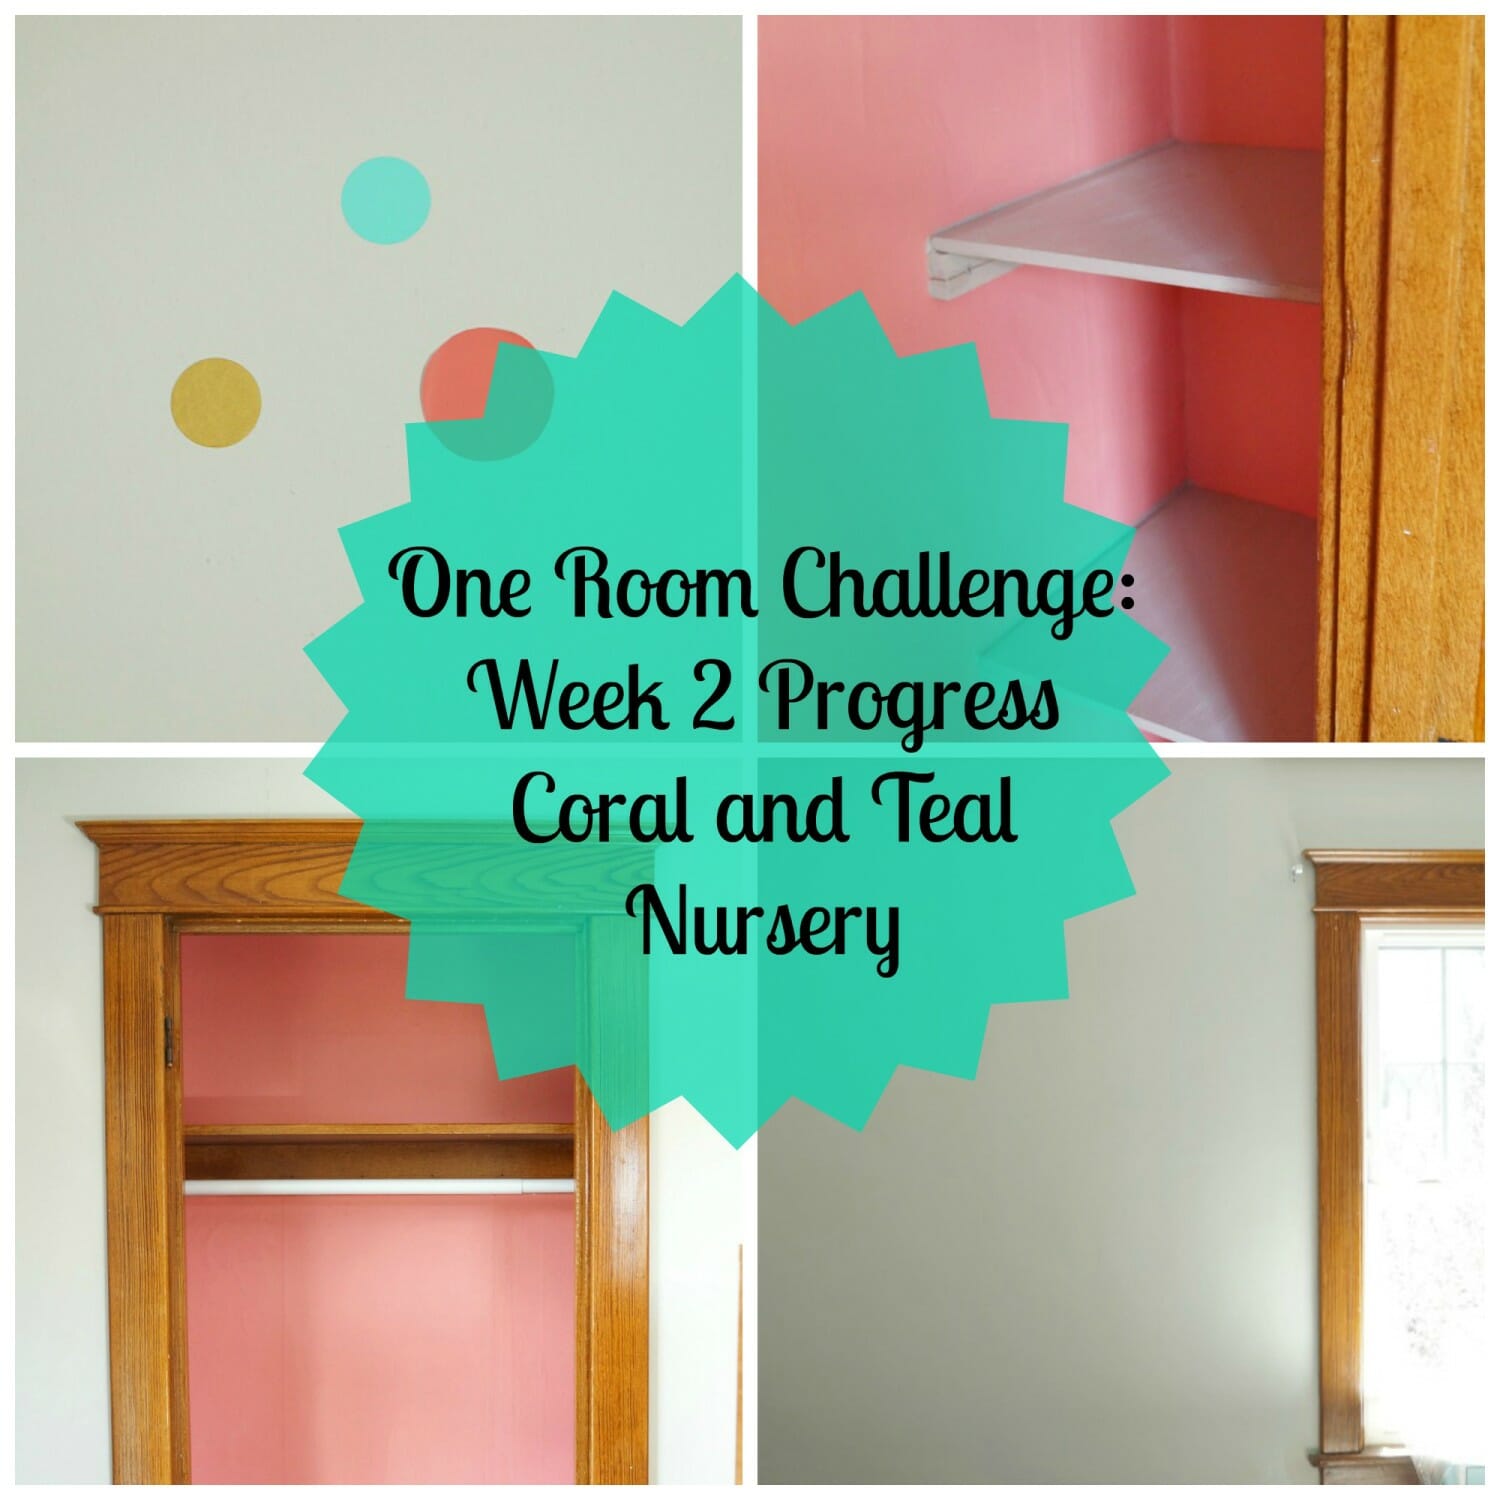 One Room Challenge: Week 2 Coral and Teal Nursery Progress